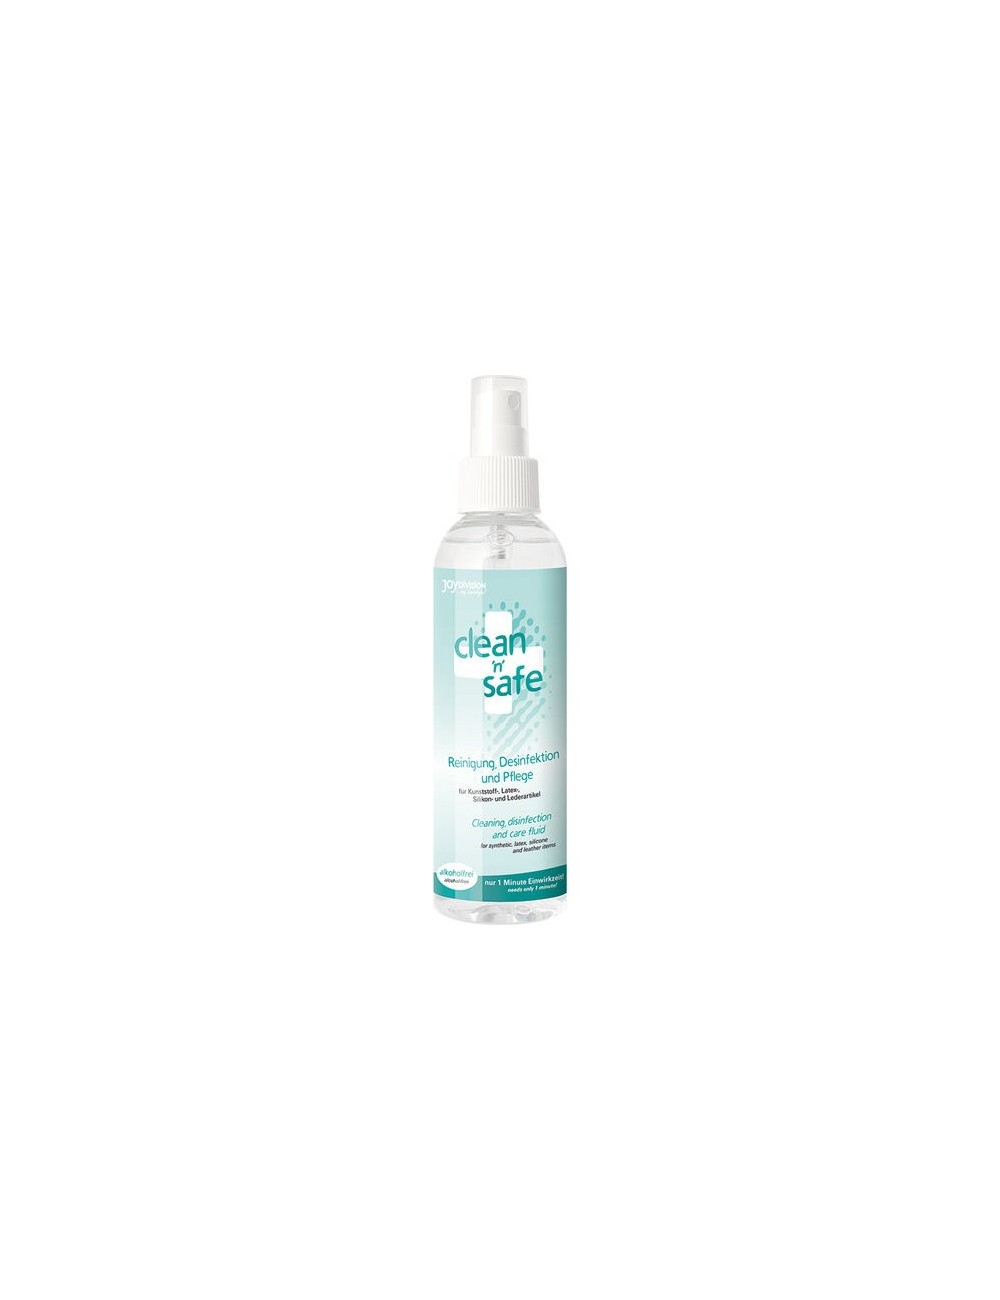 Clean safe 100 ml - Hygiène - JOYDIVISION CLEAN SAFE